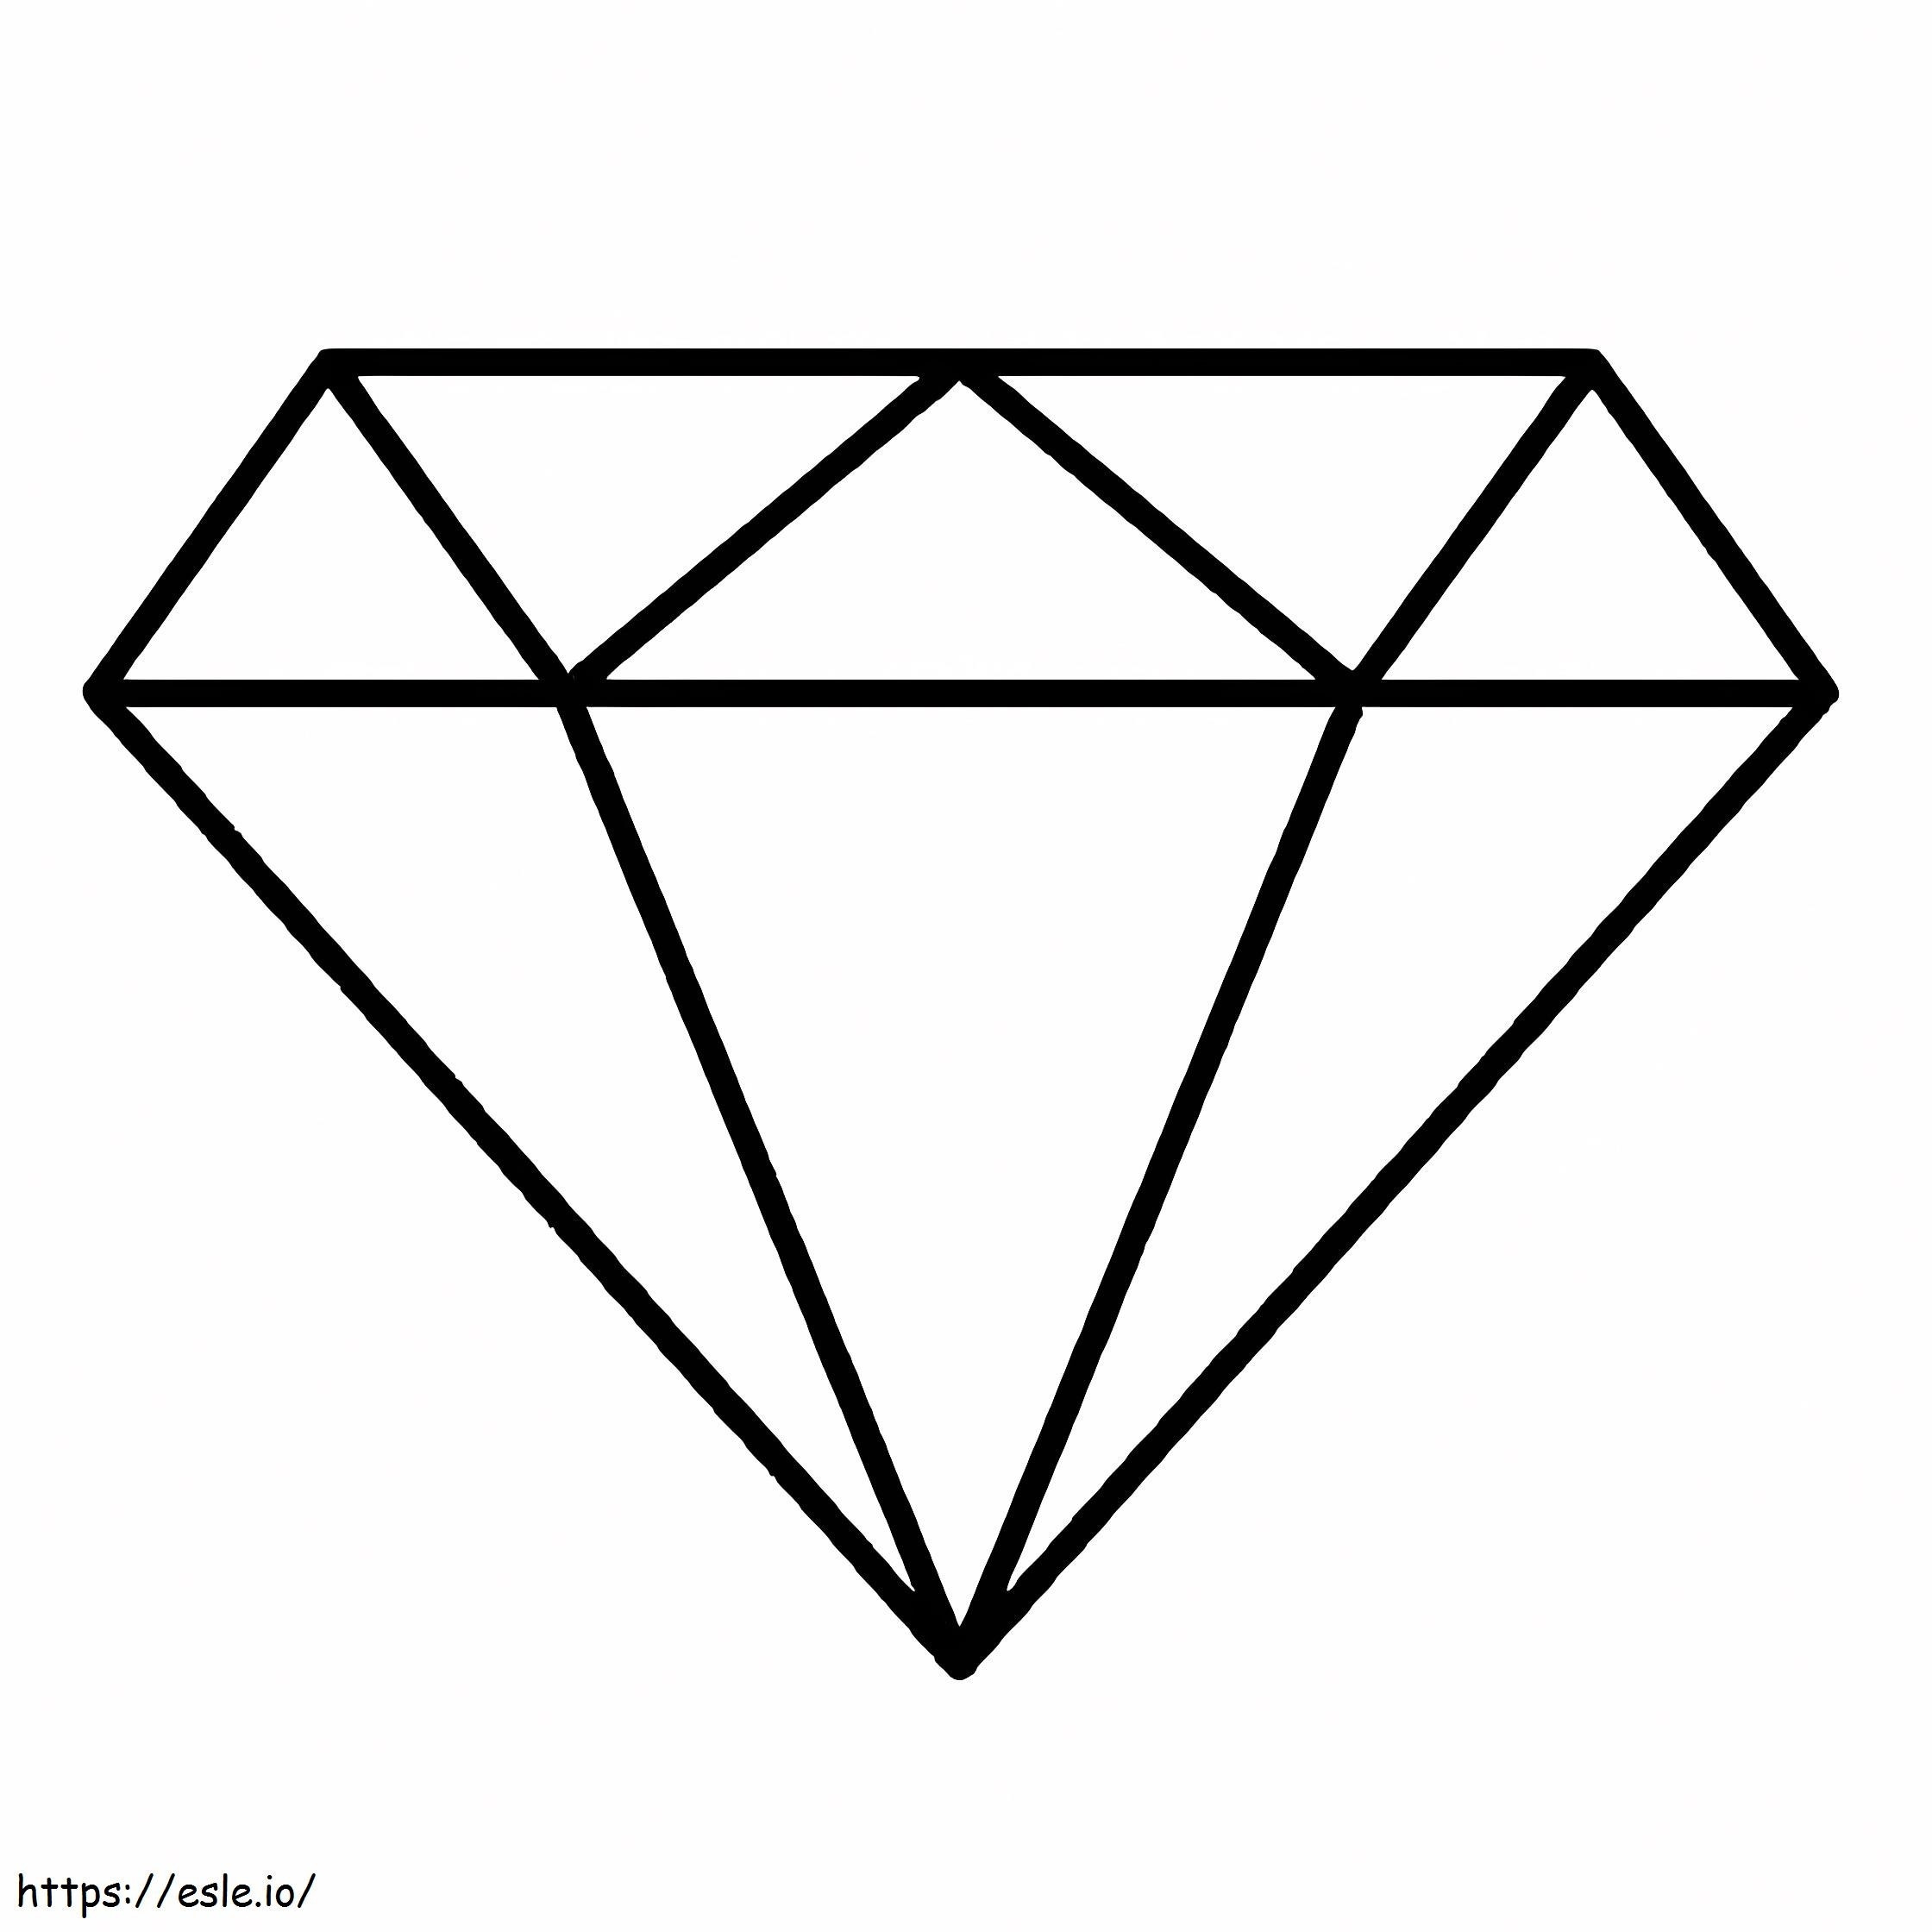 Kształt diamentu kolorowanka